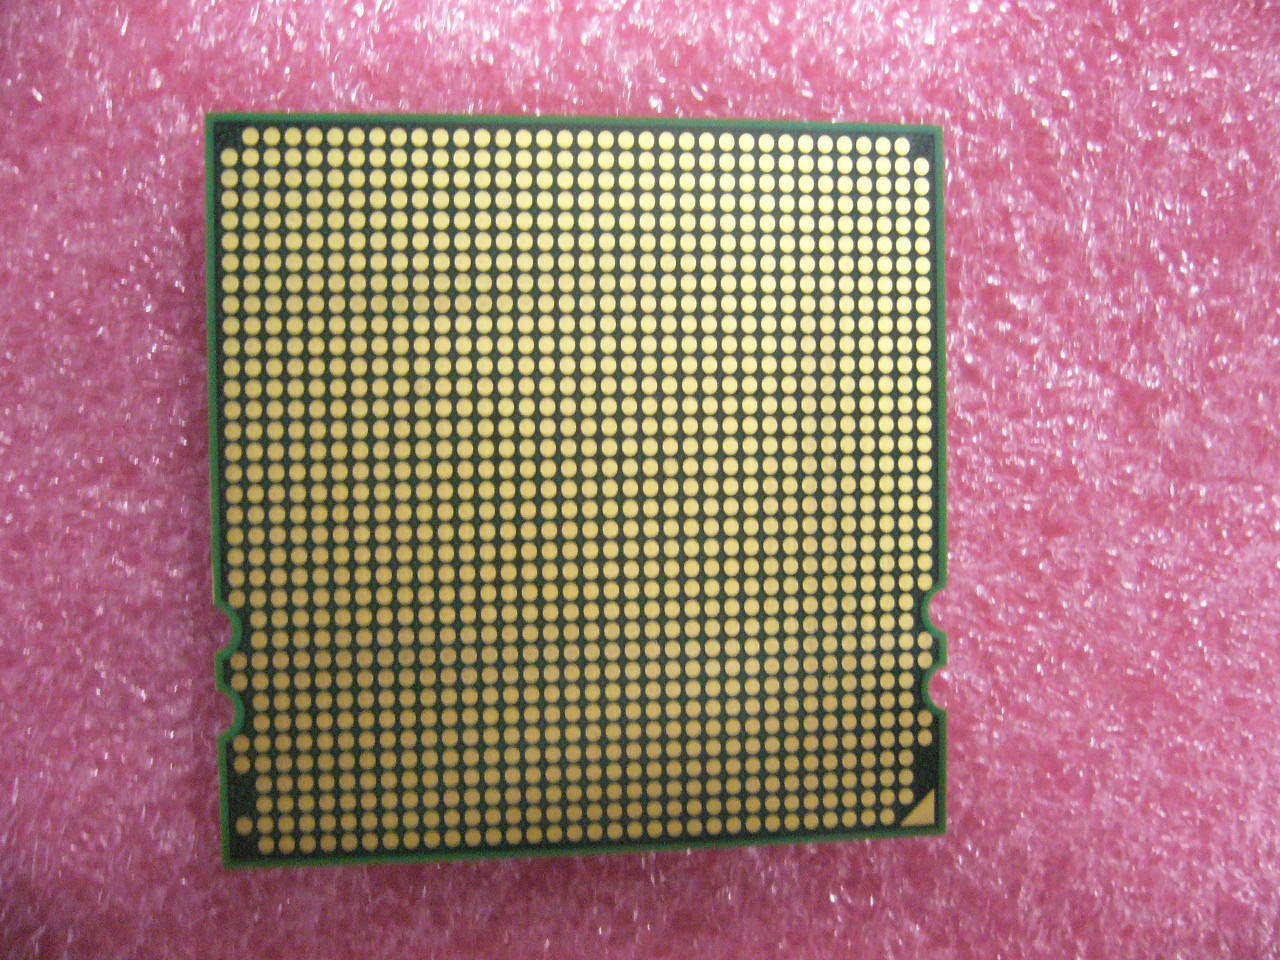 QTY 1x AMD Opteron 8376 HE 2.2 GHz Quad-Core OS8374PAL4DGI CPU Socket F 1207 - zum Schließen ins Bild klicken